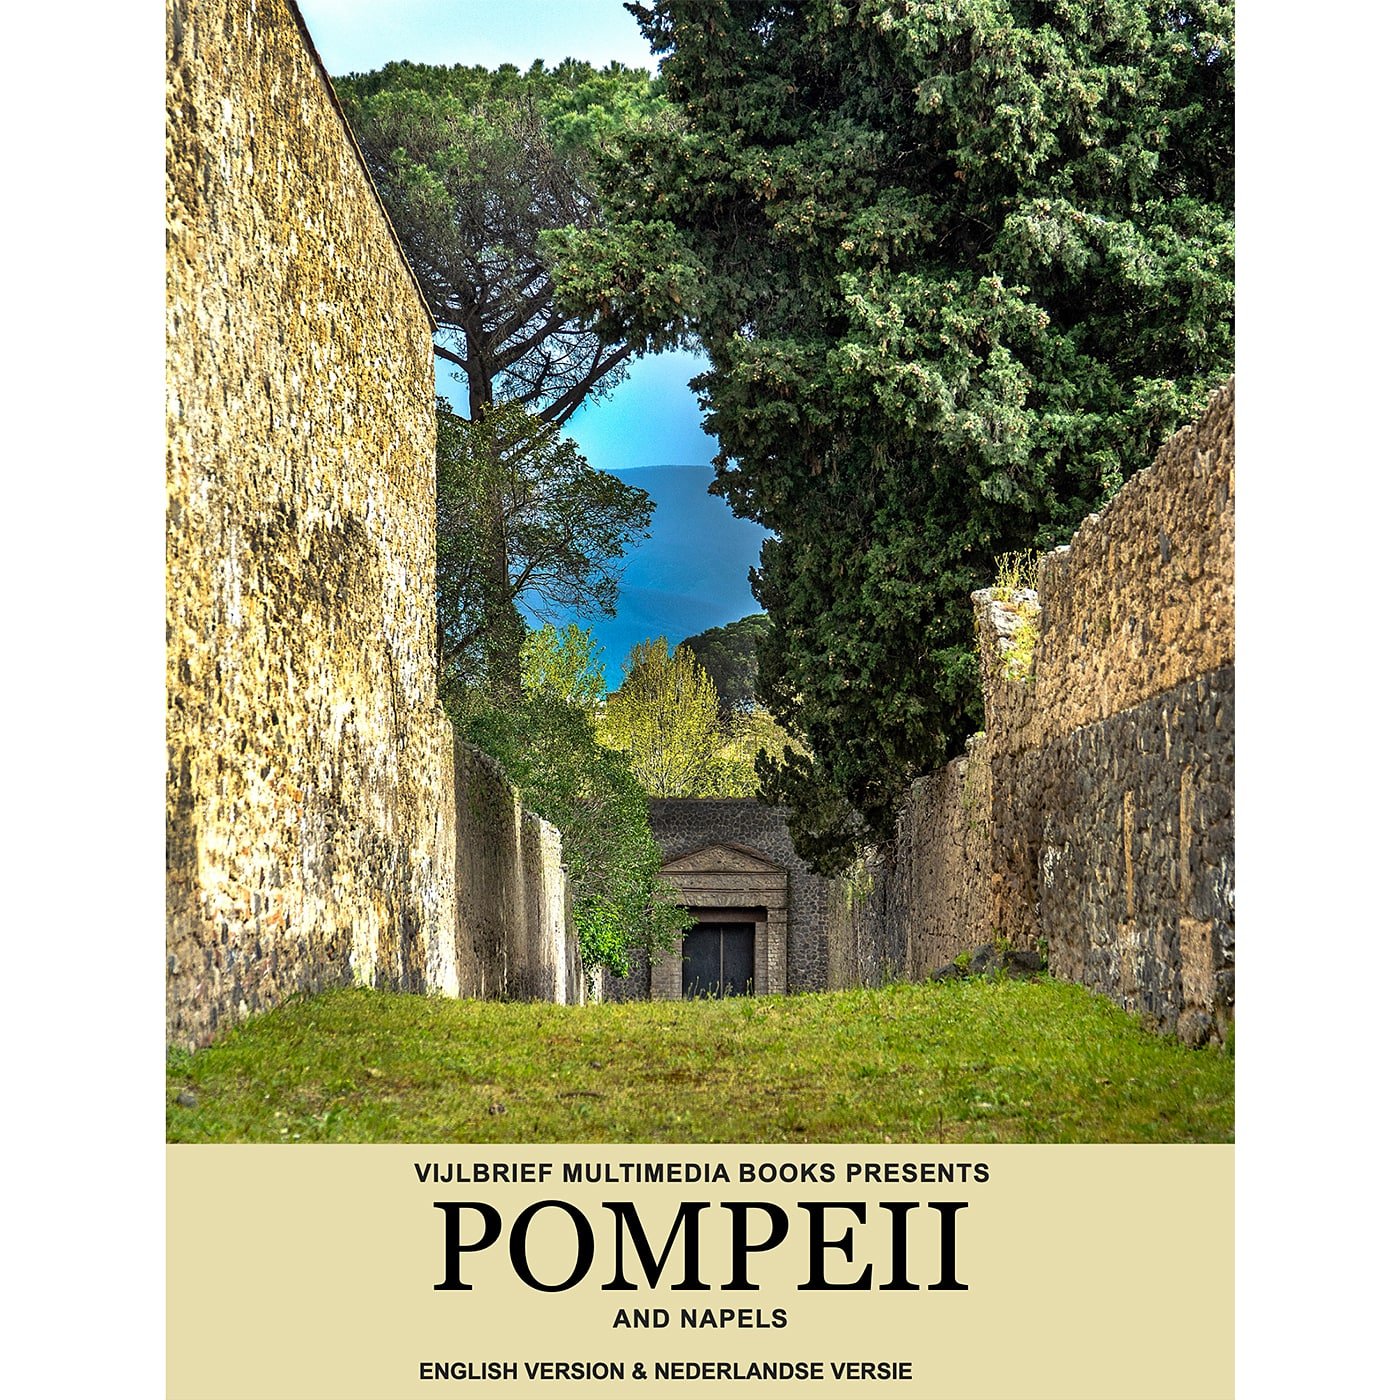 Pompei1_JohnVijlbrief-min.jpg